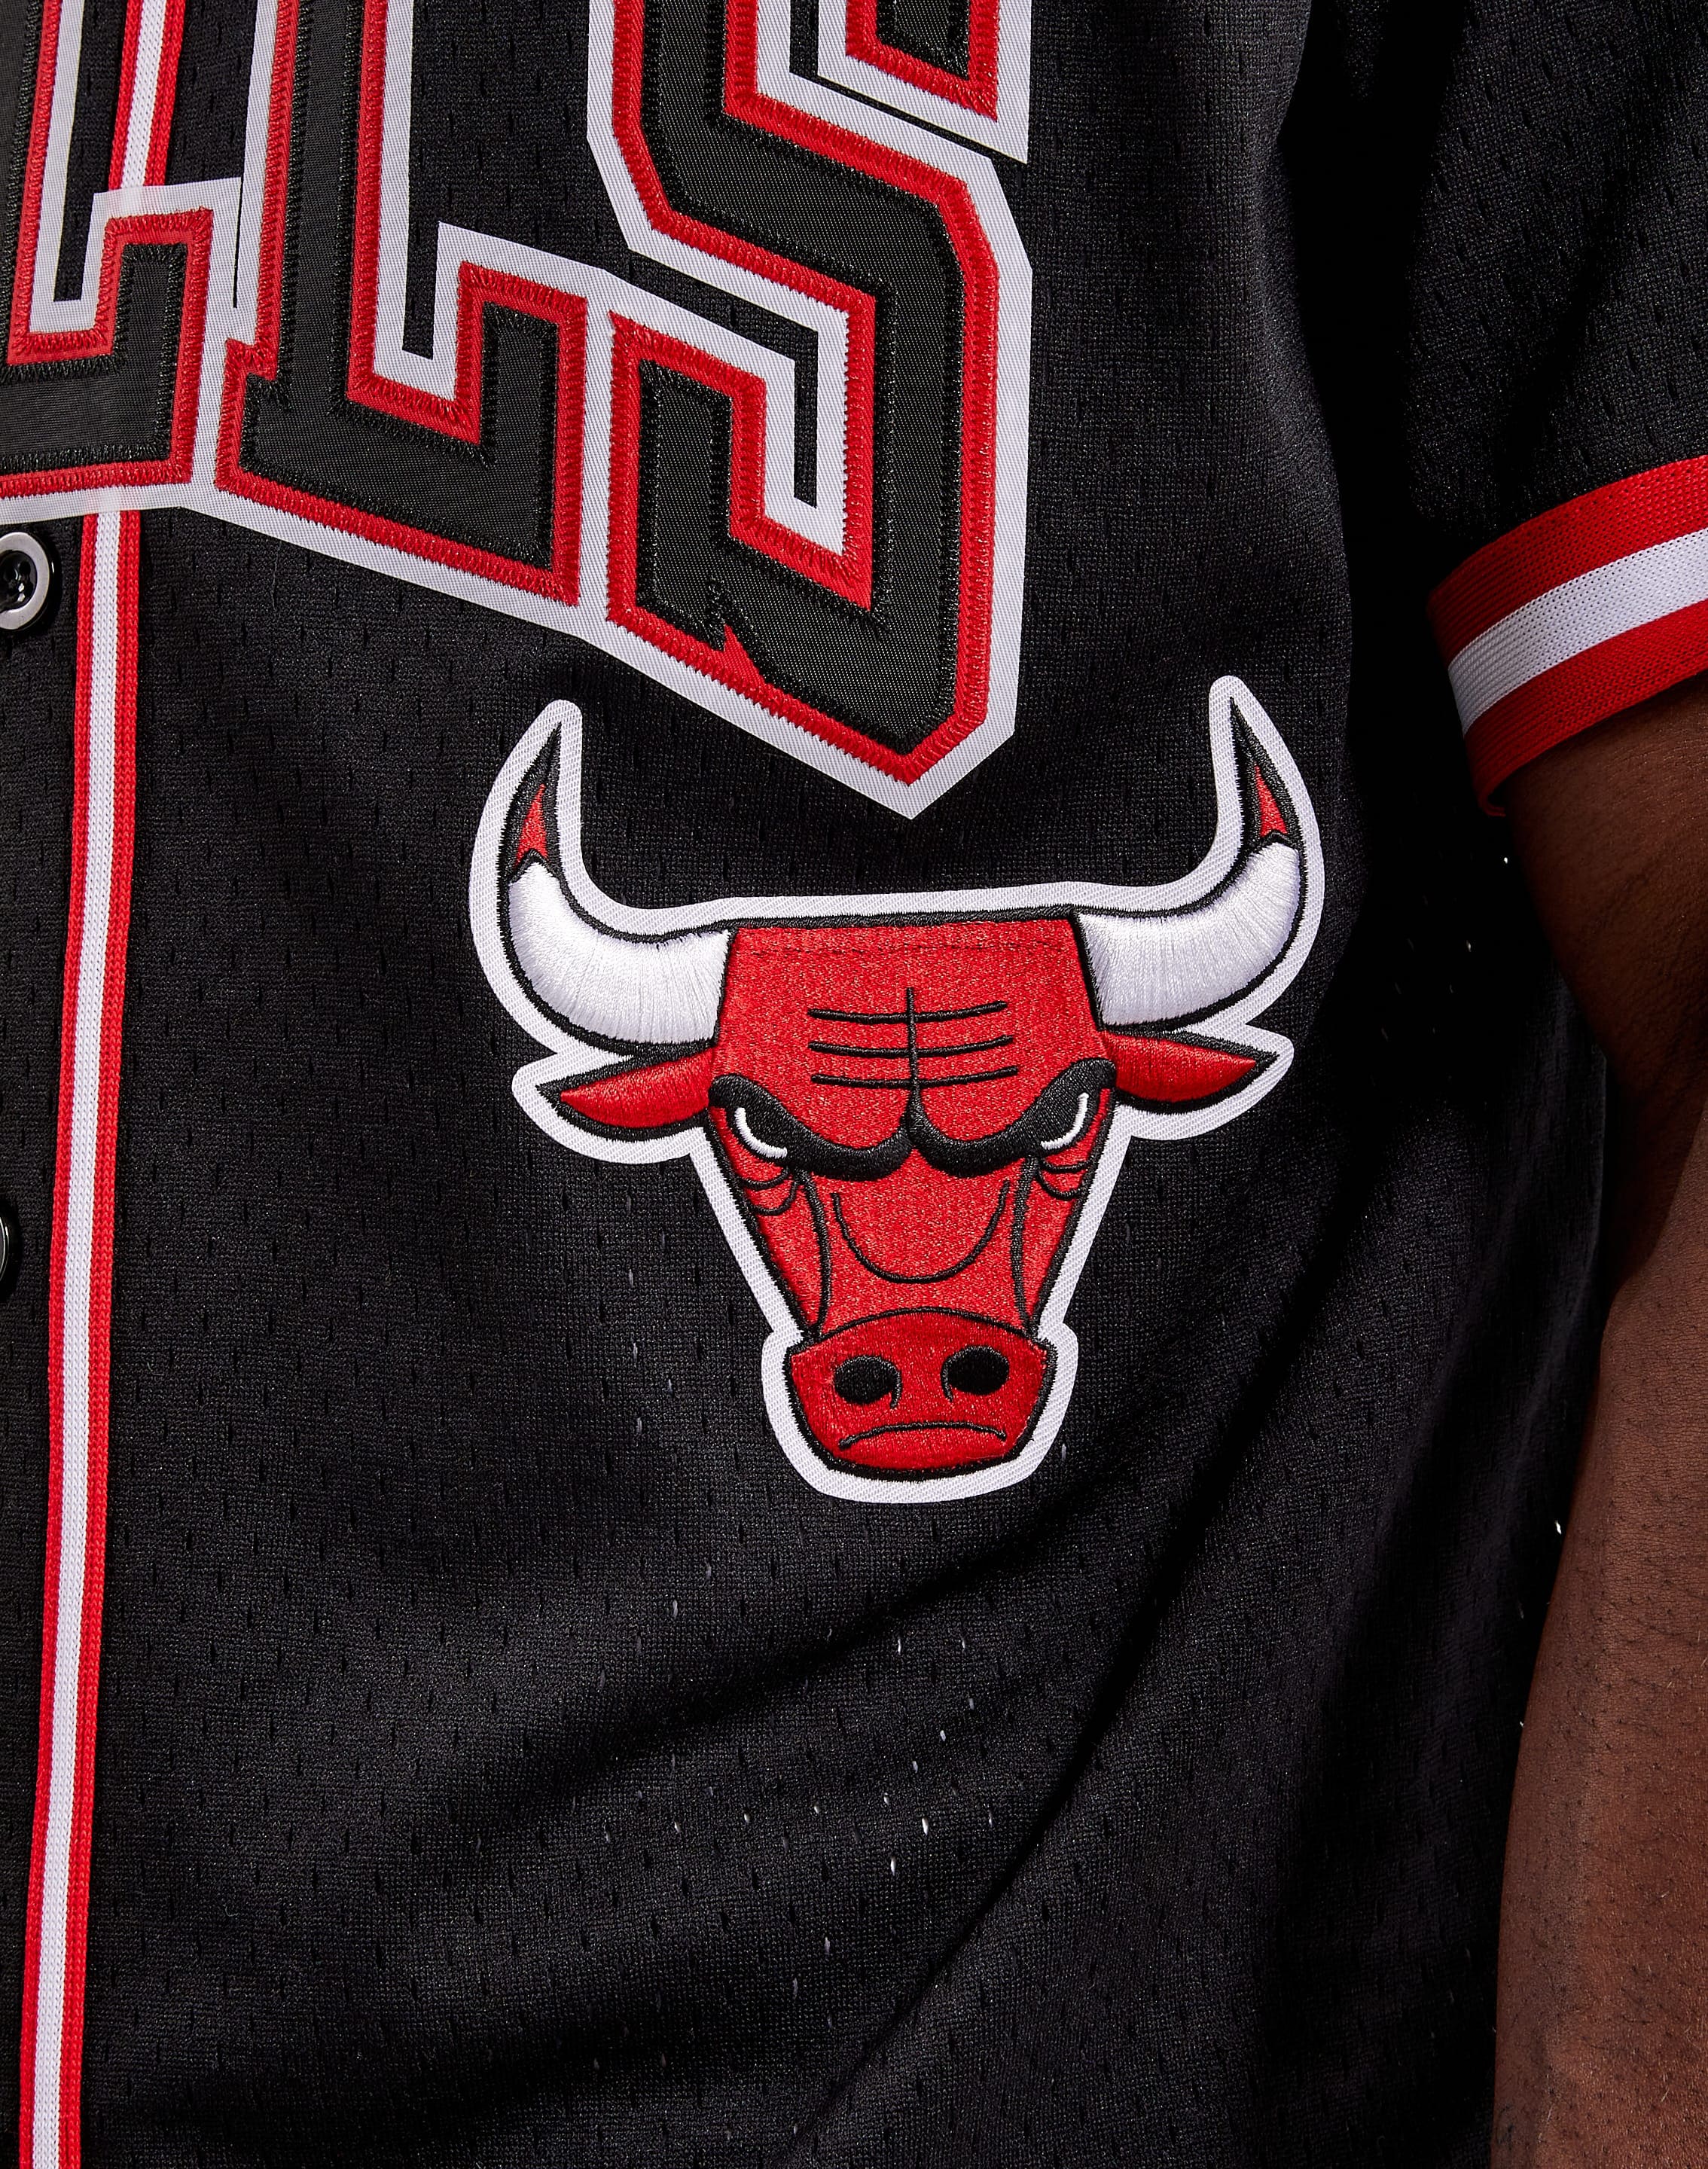 NBA Chicago Bulls 10 Pets Basketball Mesh Jersey